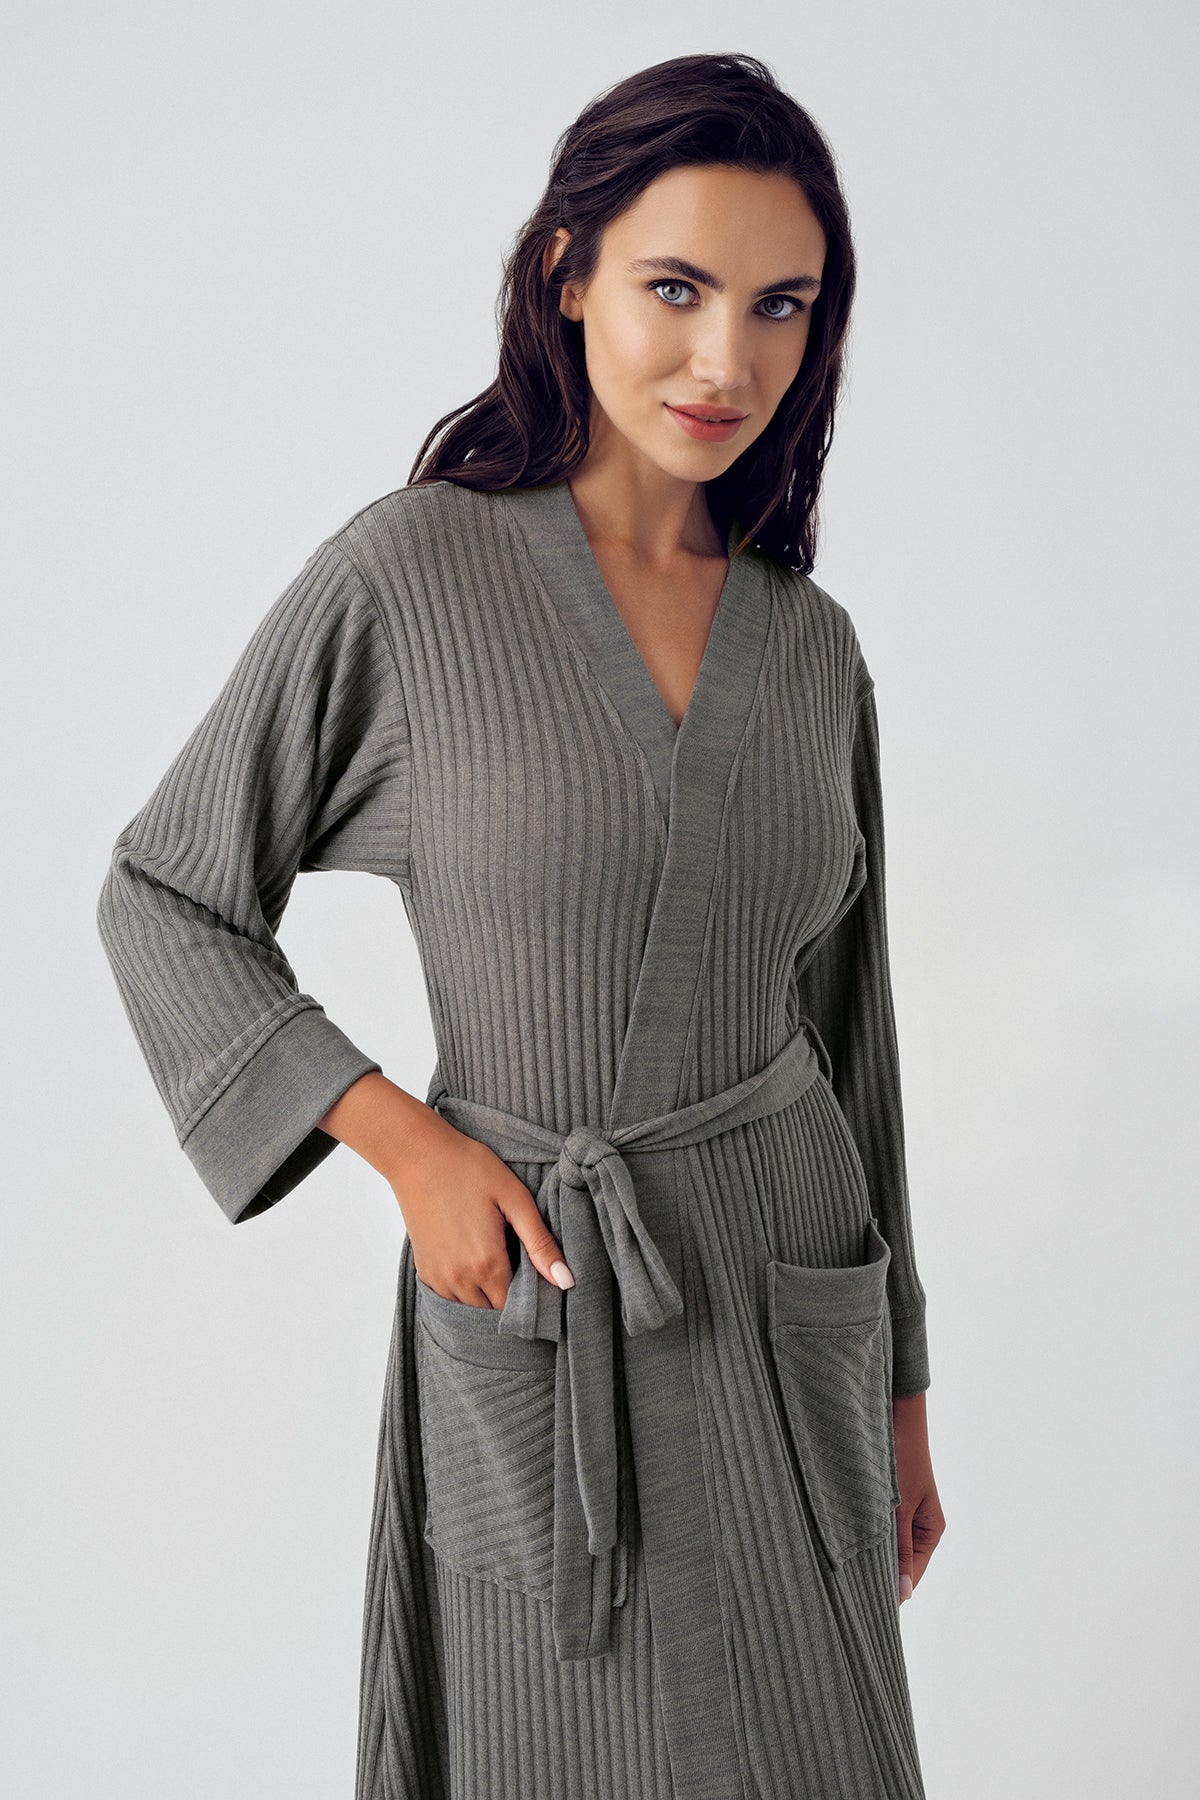 Shopymommy 15508 Jacquard Knitwear Long Maternity Robe Khaki